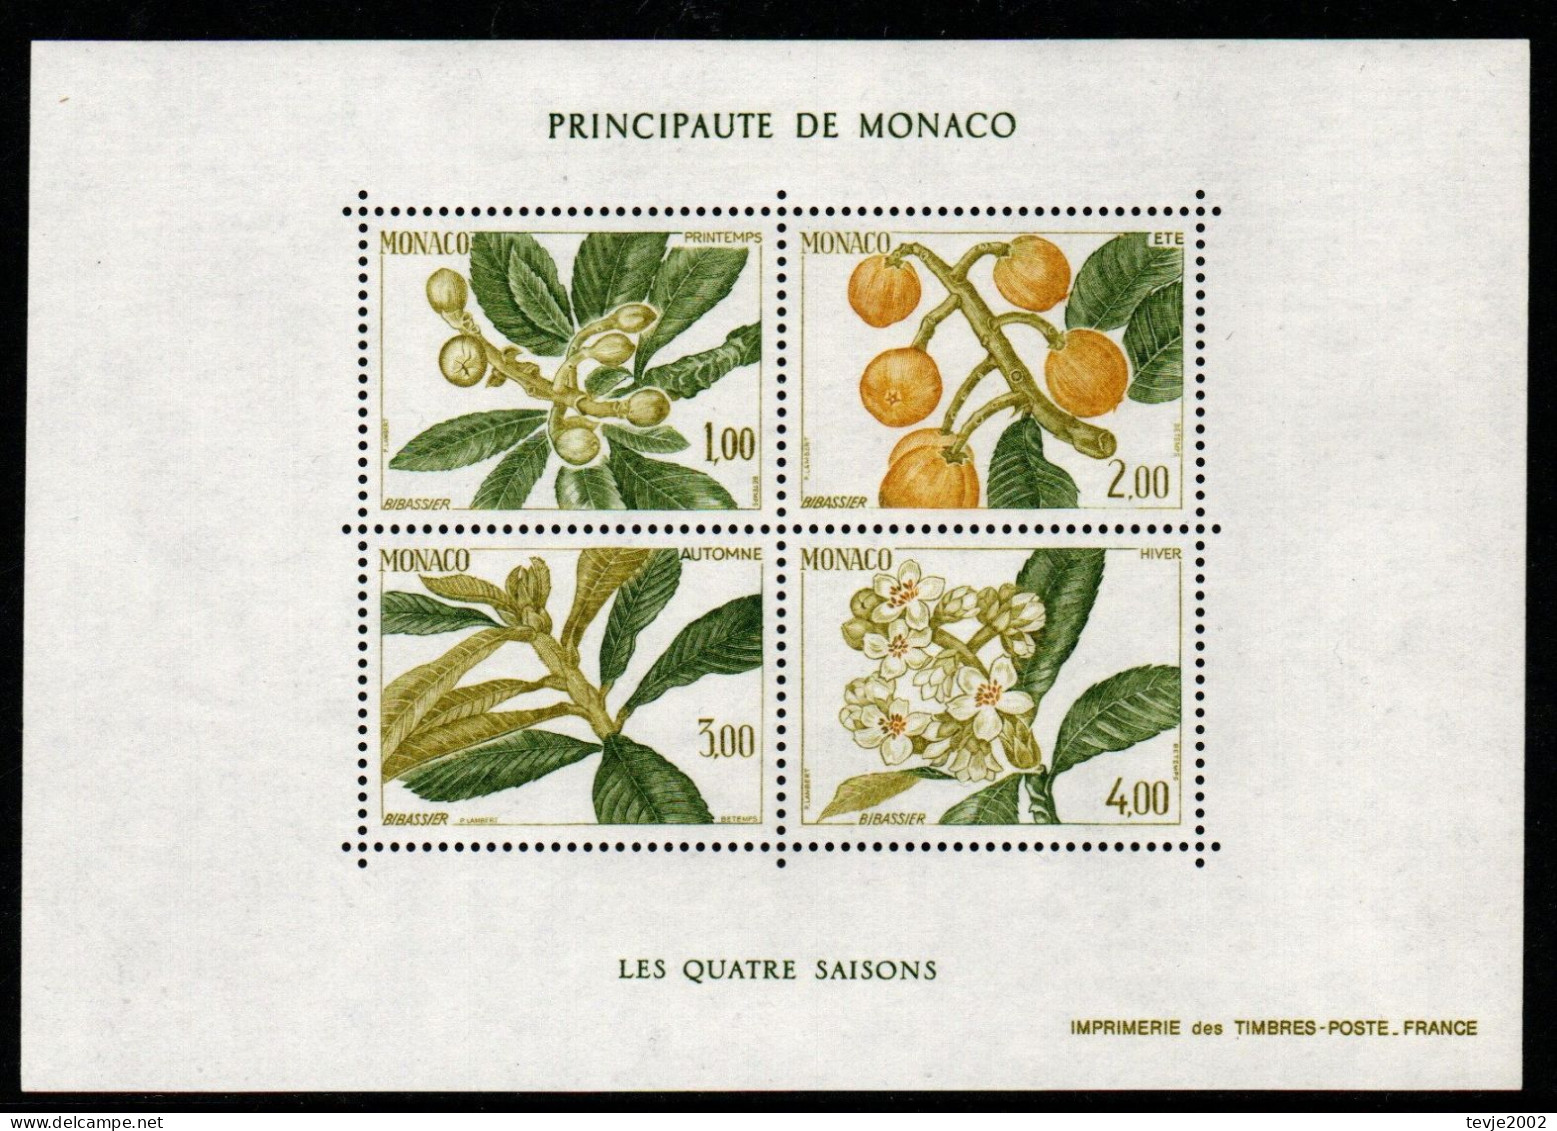 Monaco 1985 - Mi.Nr. Block 29 - Postfrisch MNH - Bäume Trees - Alberi